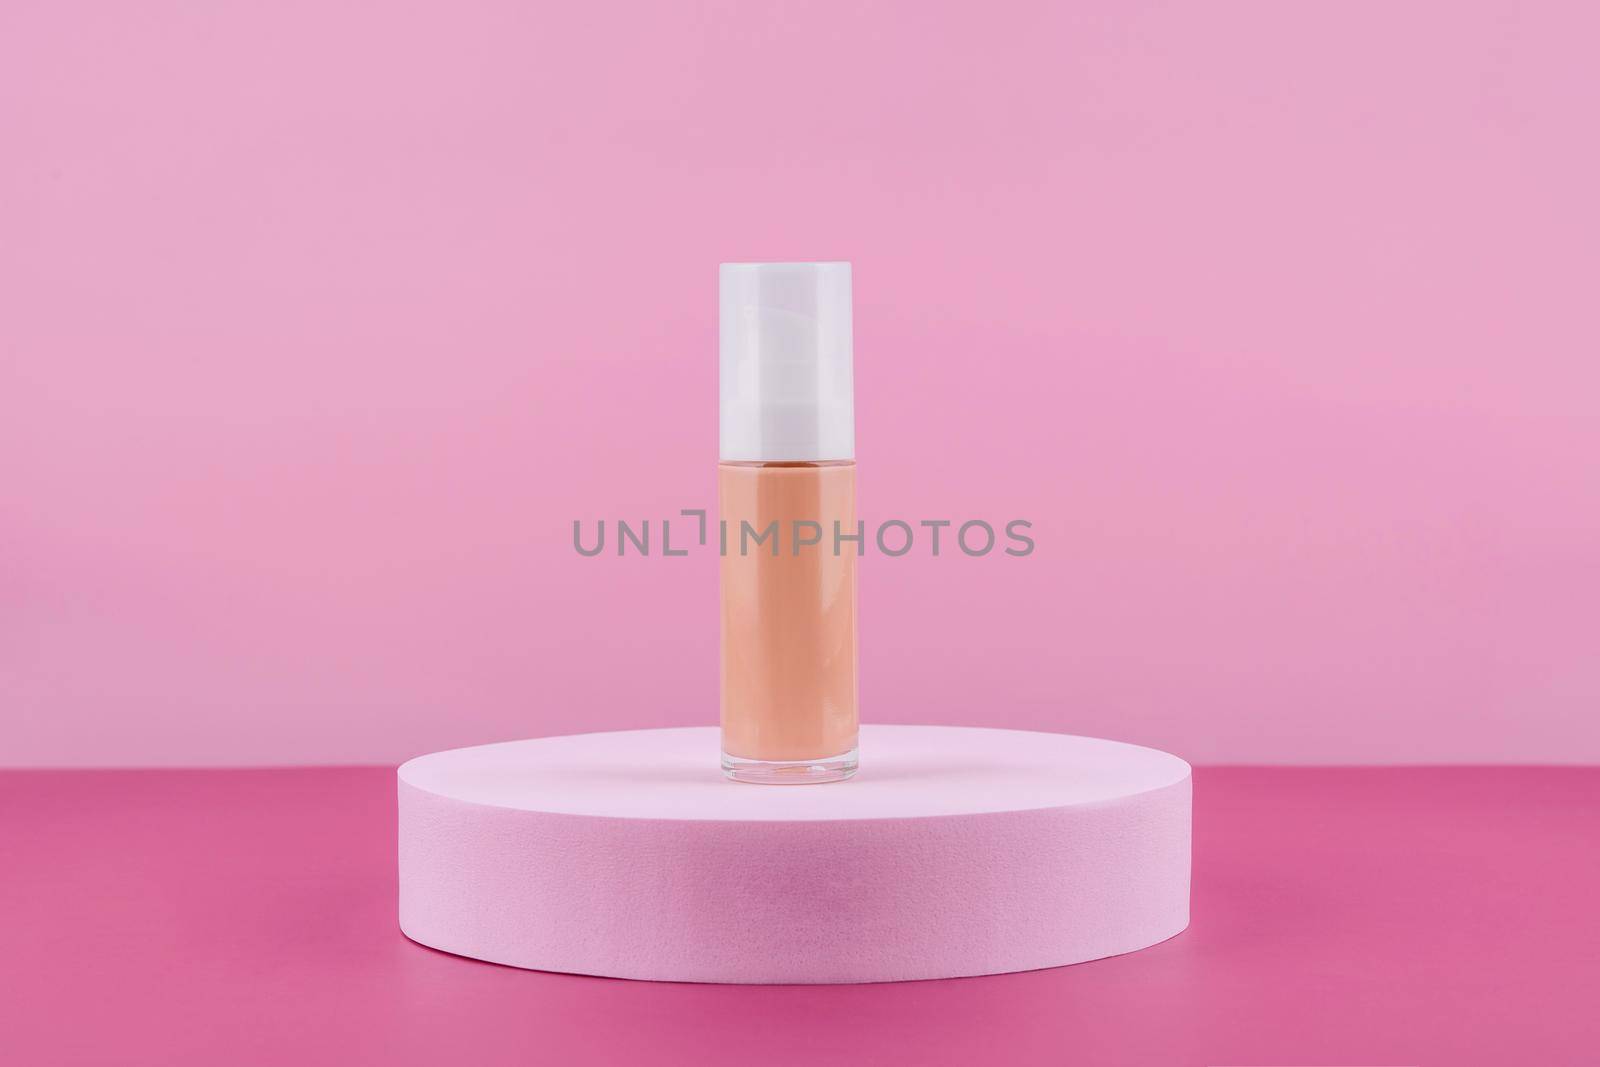 Cosmetic liquid foundation nude cream bottle mockup on round podium pedestal. Beige concealer base cosmetics product mock up on pink background. Skincare beauty primer, bb corrector by photolime